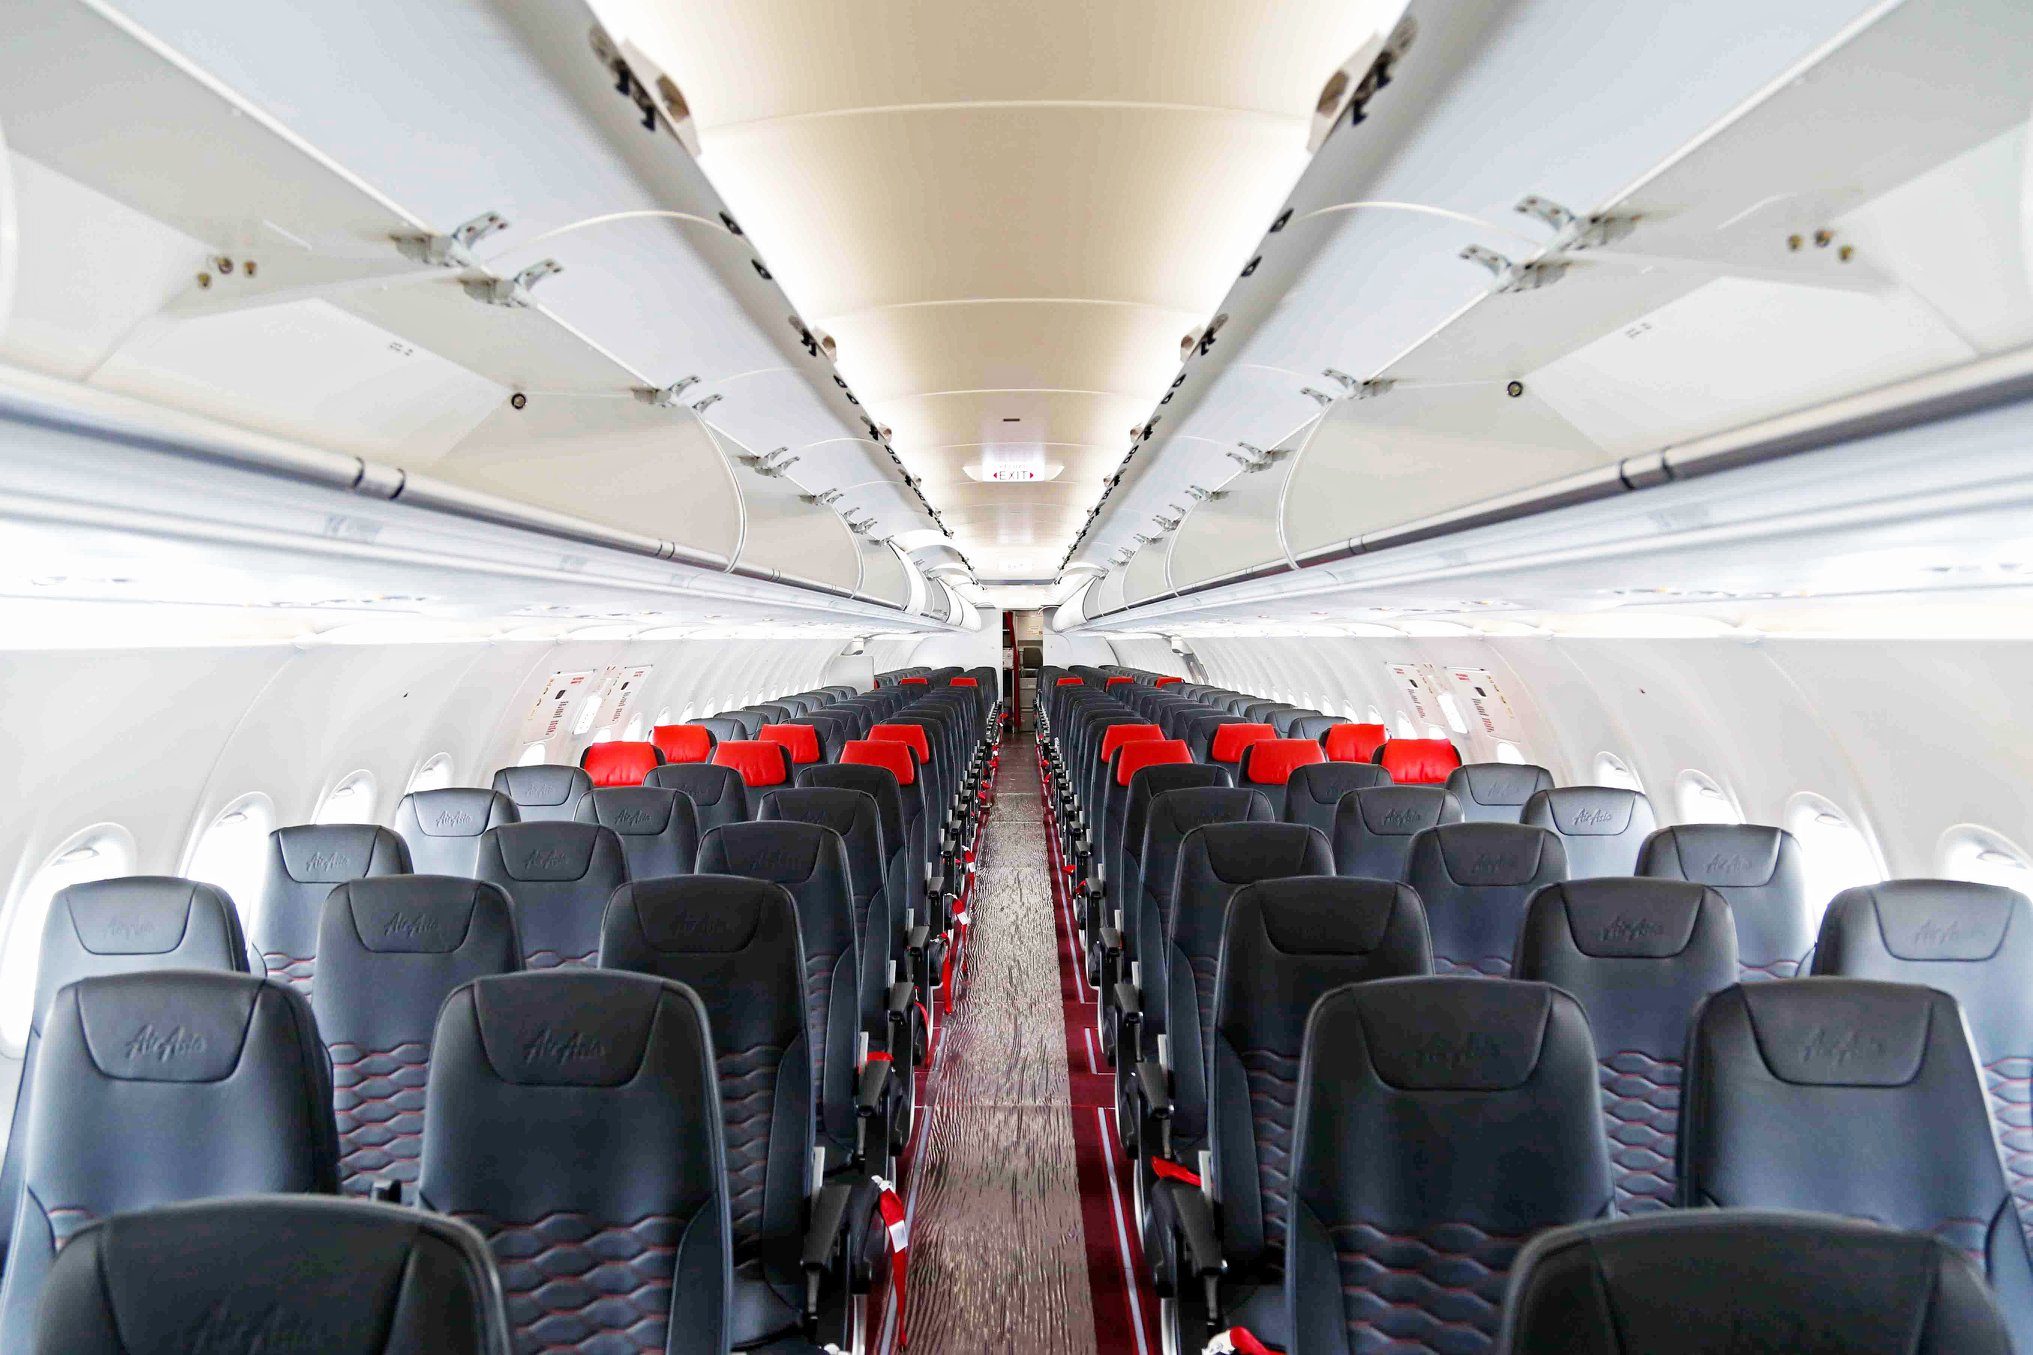 Seat sale alert: AirAsia offers 6 million seats for P1 base fare